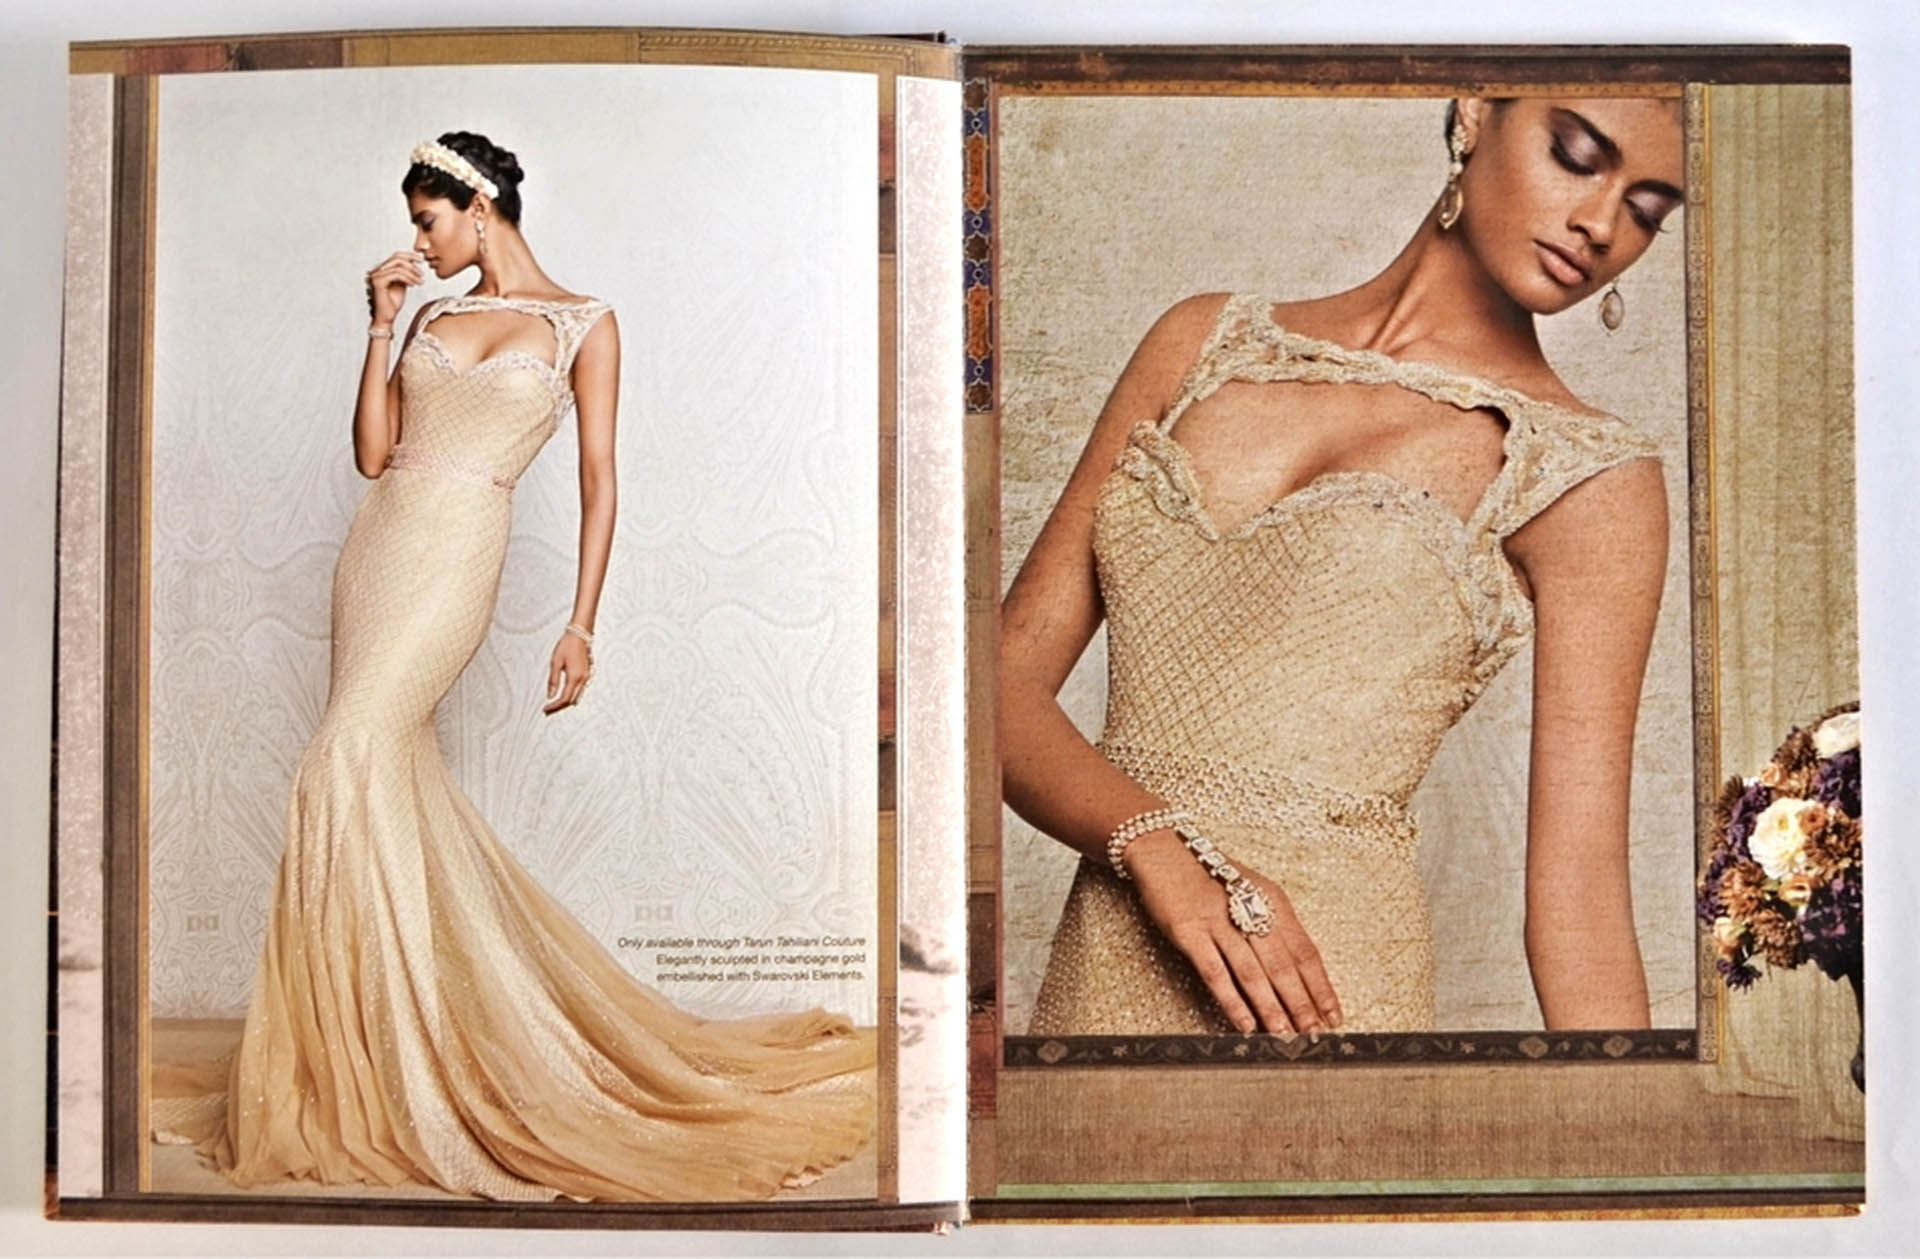 Catalogue design to promote Tarun Tahiliani Design Studio who create couture with an Indian sensibility